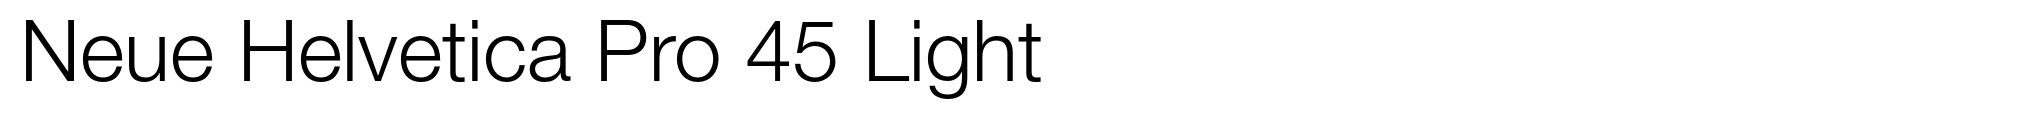 Neue Helvetica Pro 45 Light image